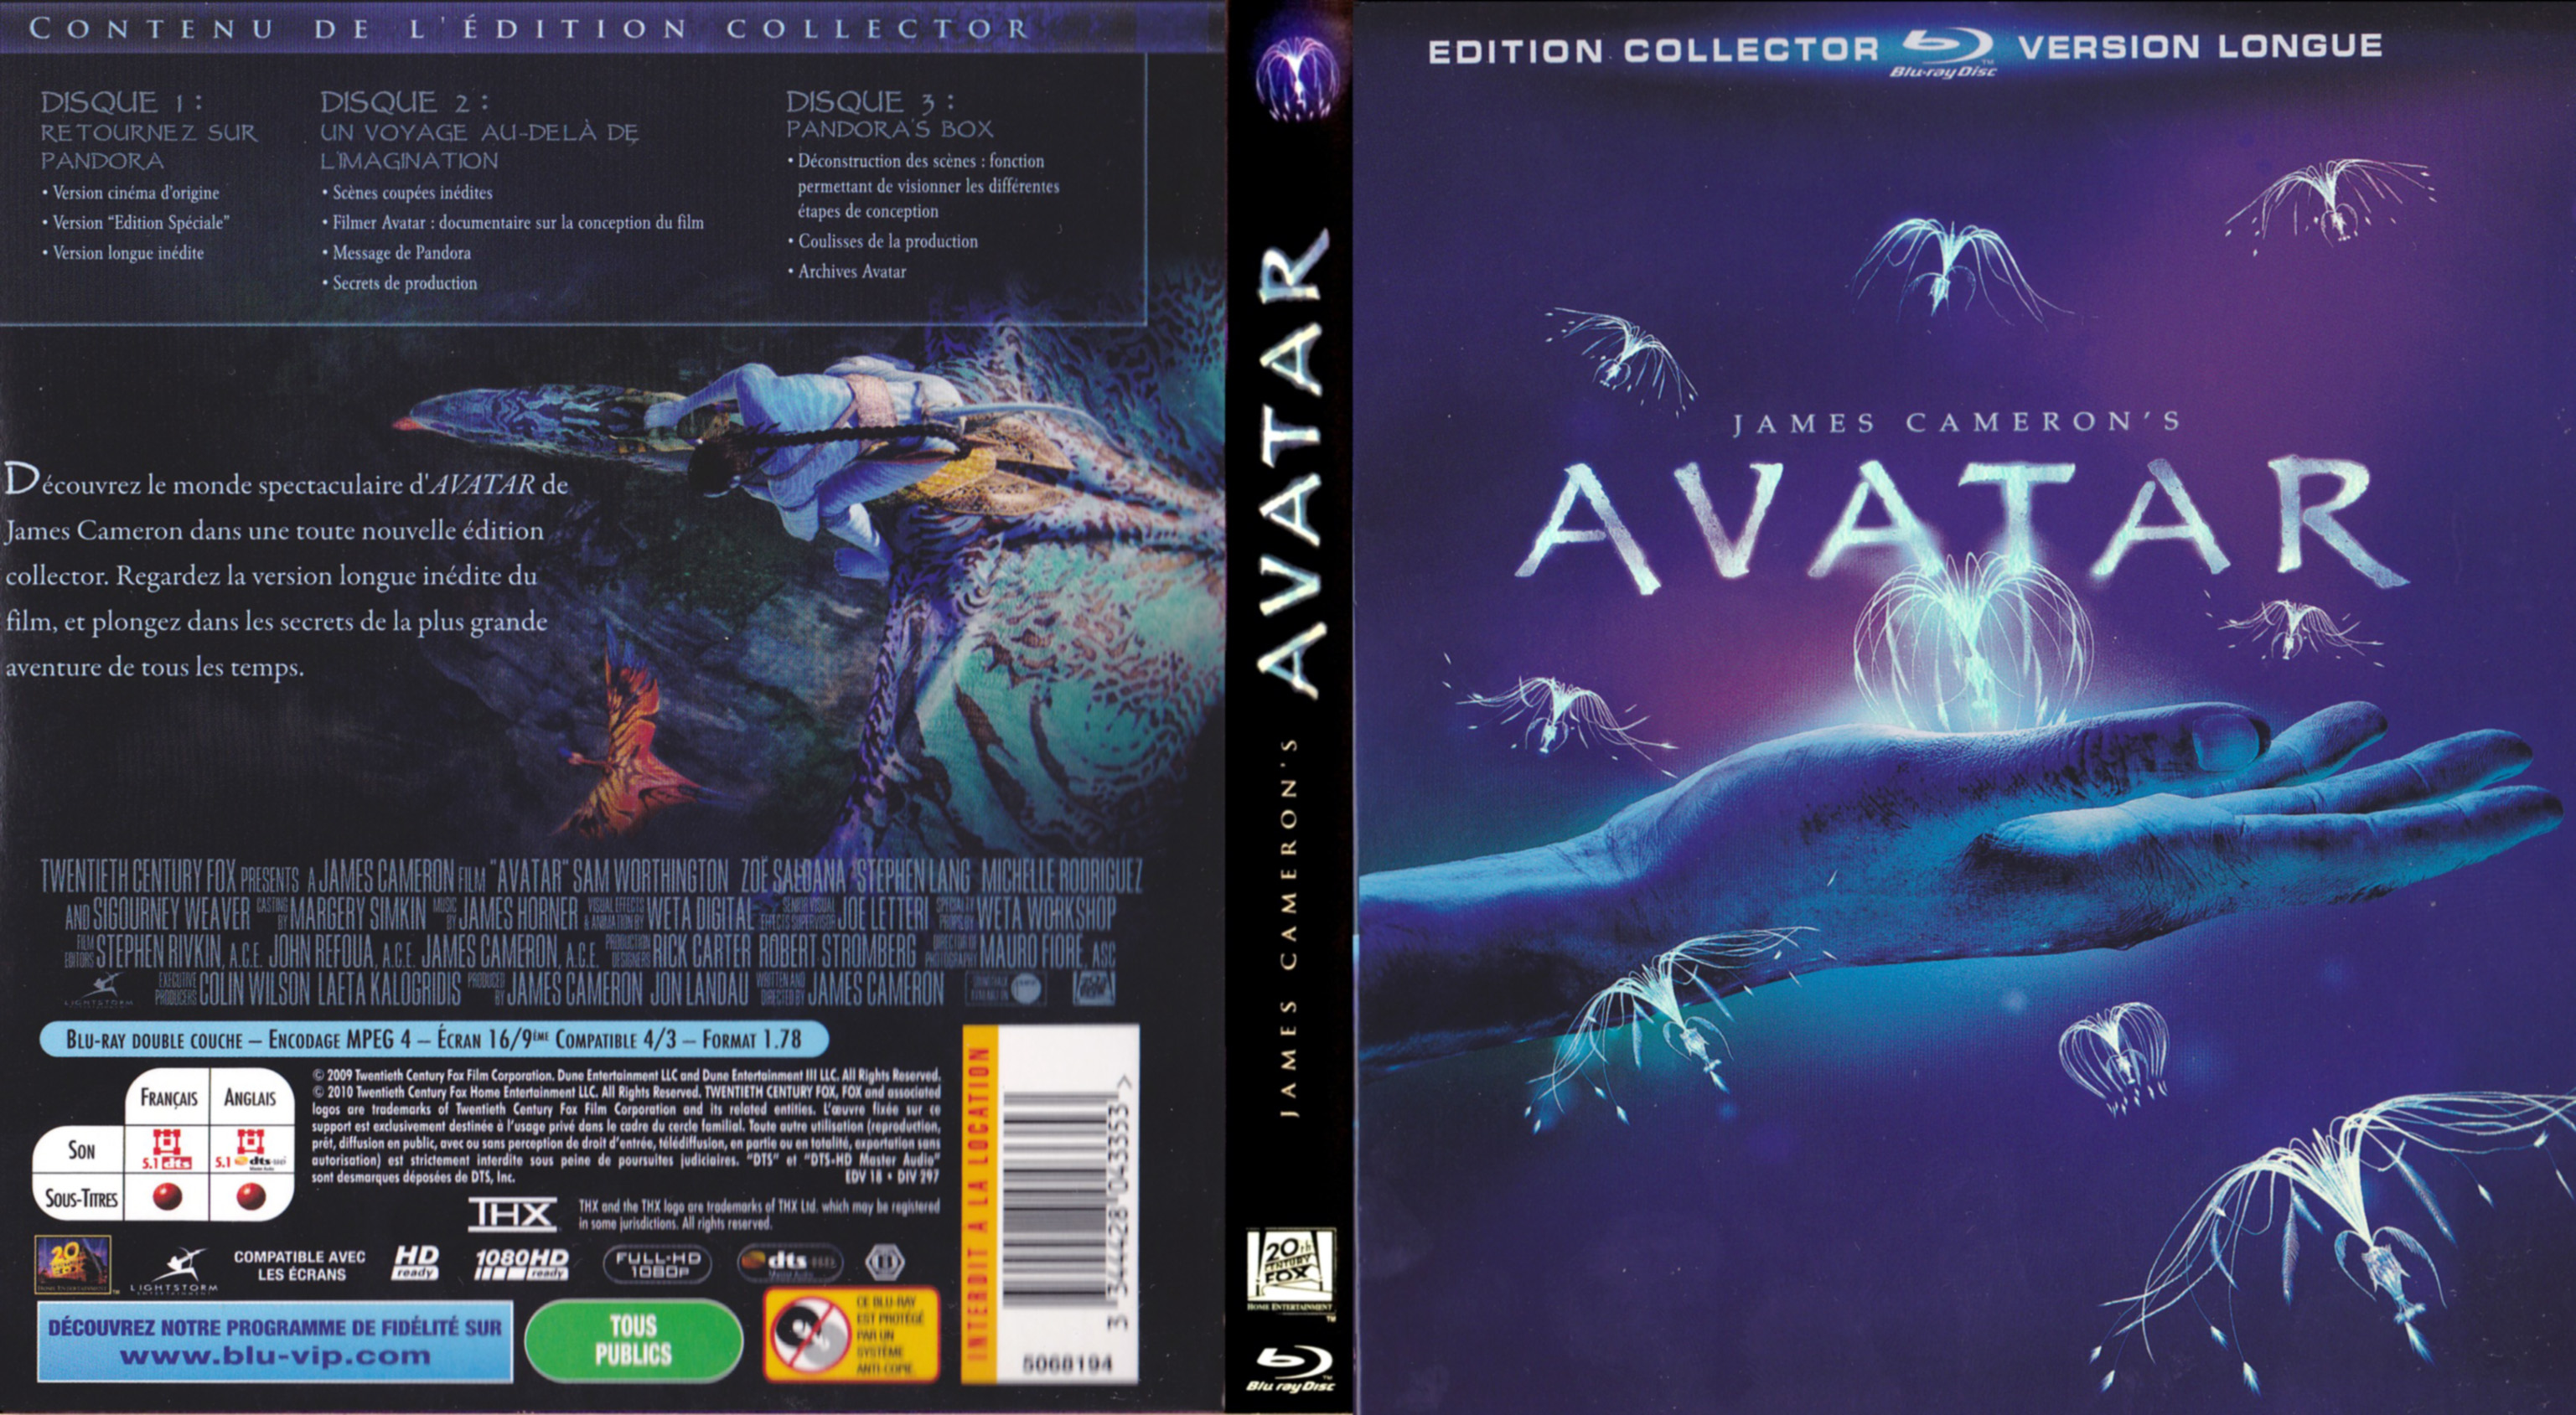 Jaquette DVD Avatar (BLU-RAY) v4